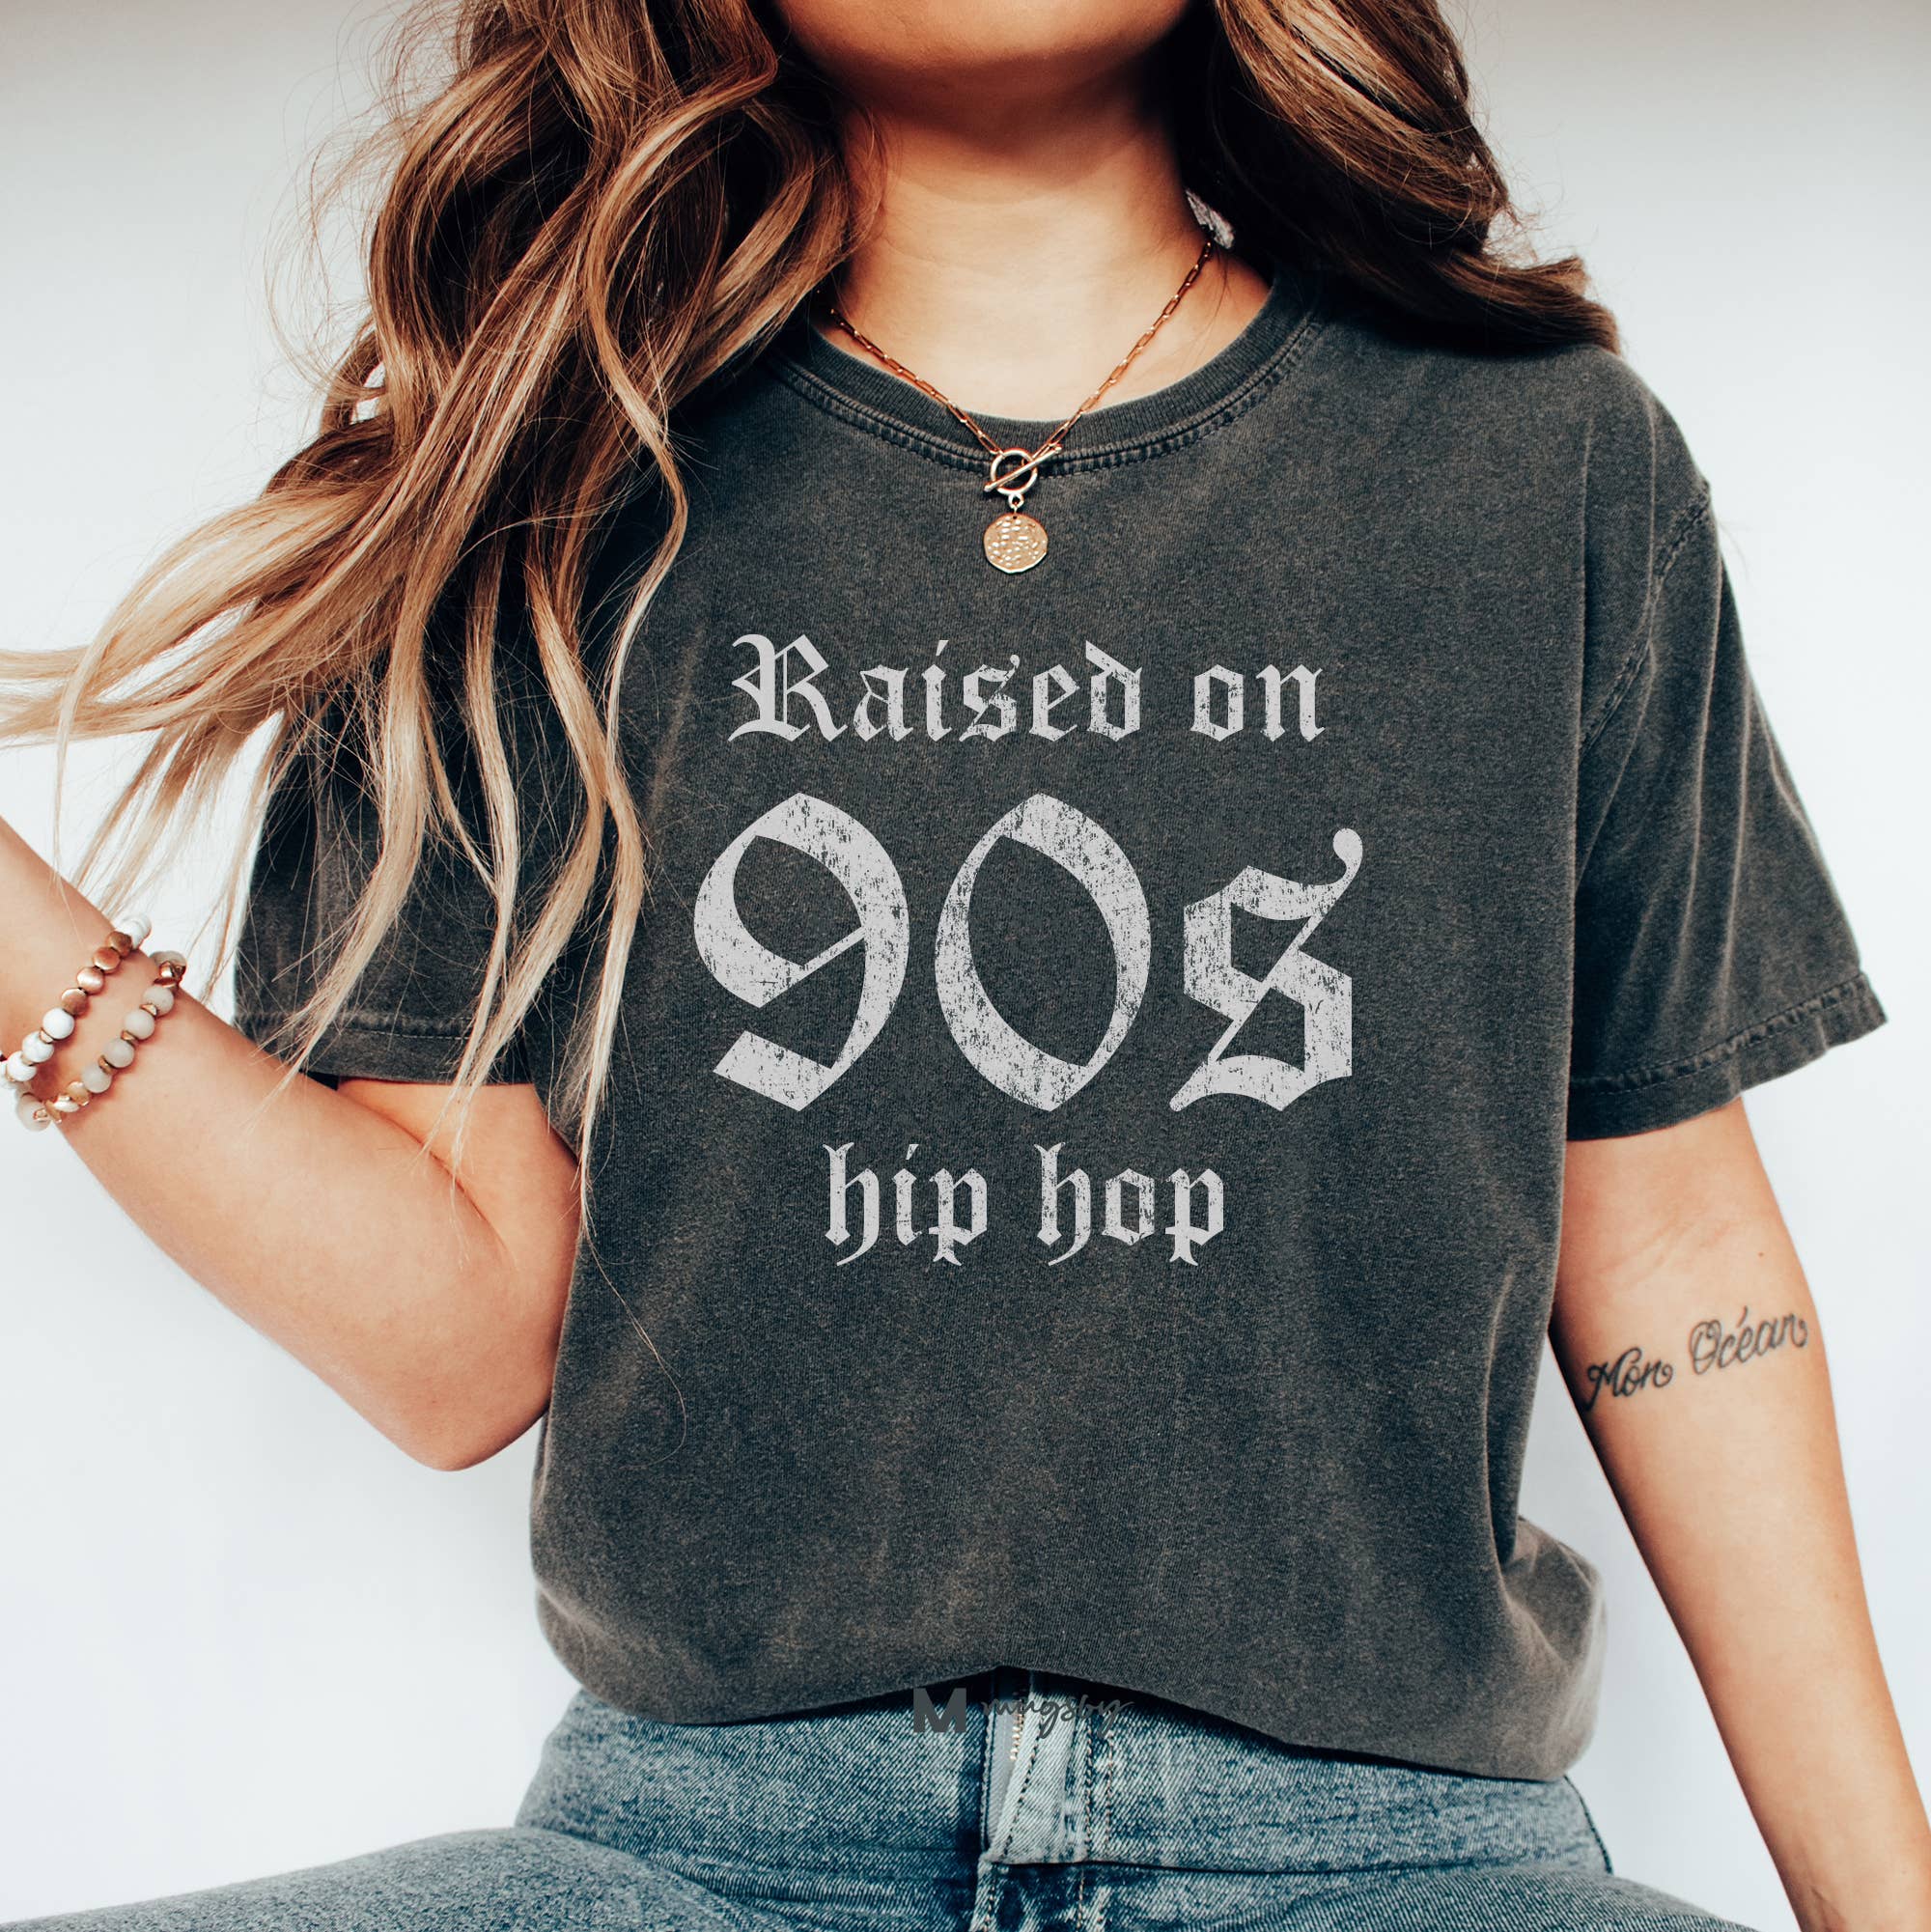 Raised on 90s Hip Hop Shirt: Small Tops